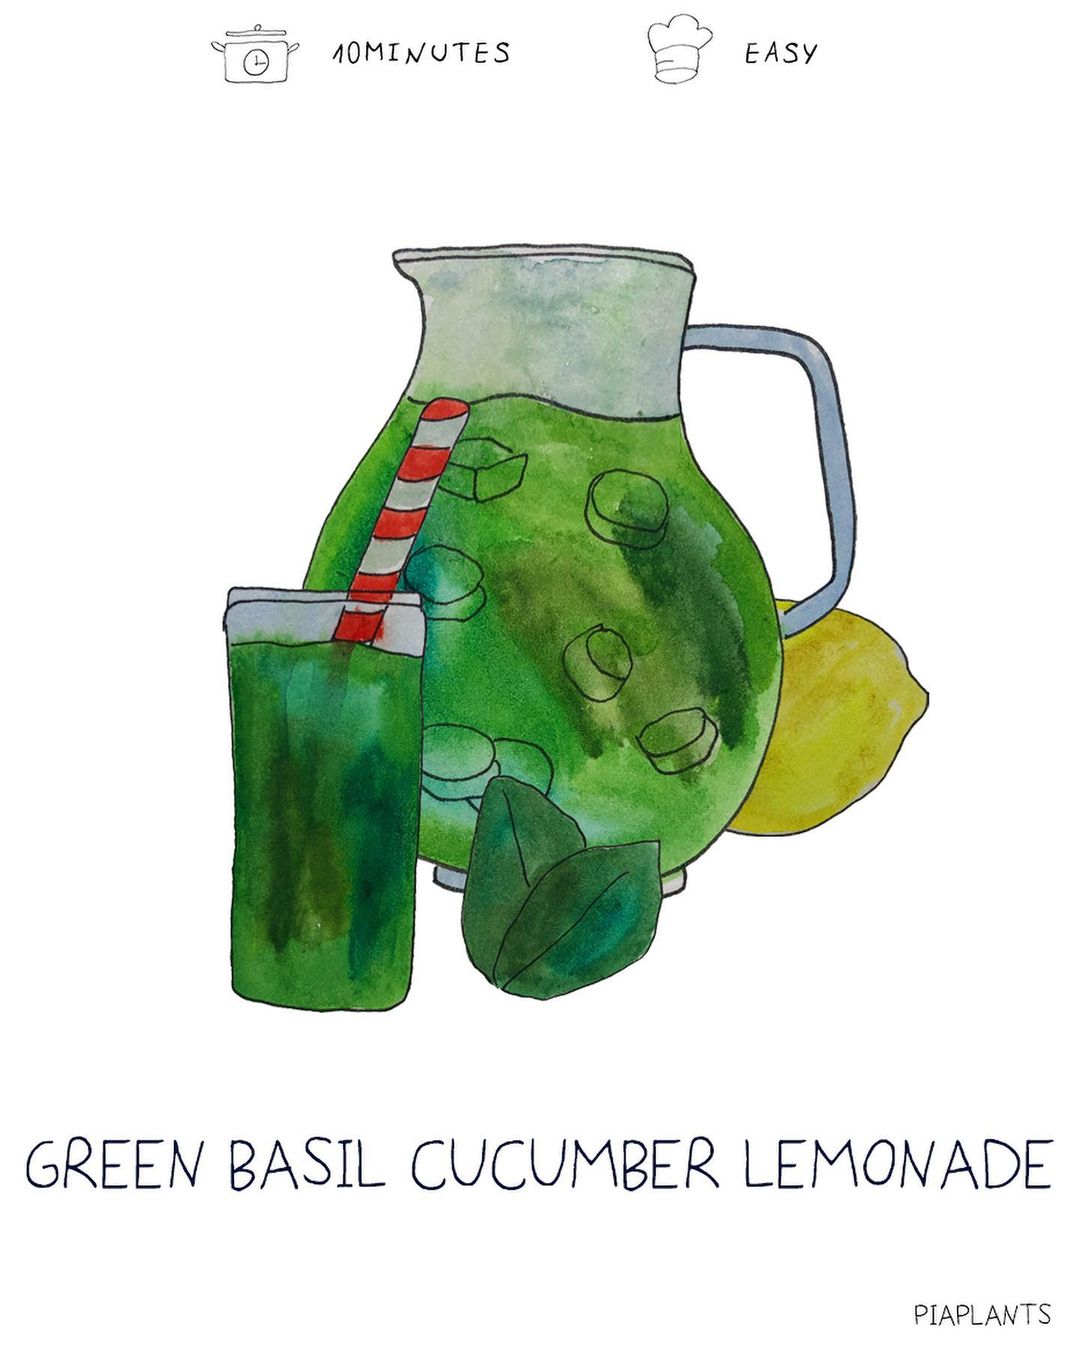 Green Basil Cucumber Lemonade